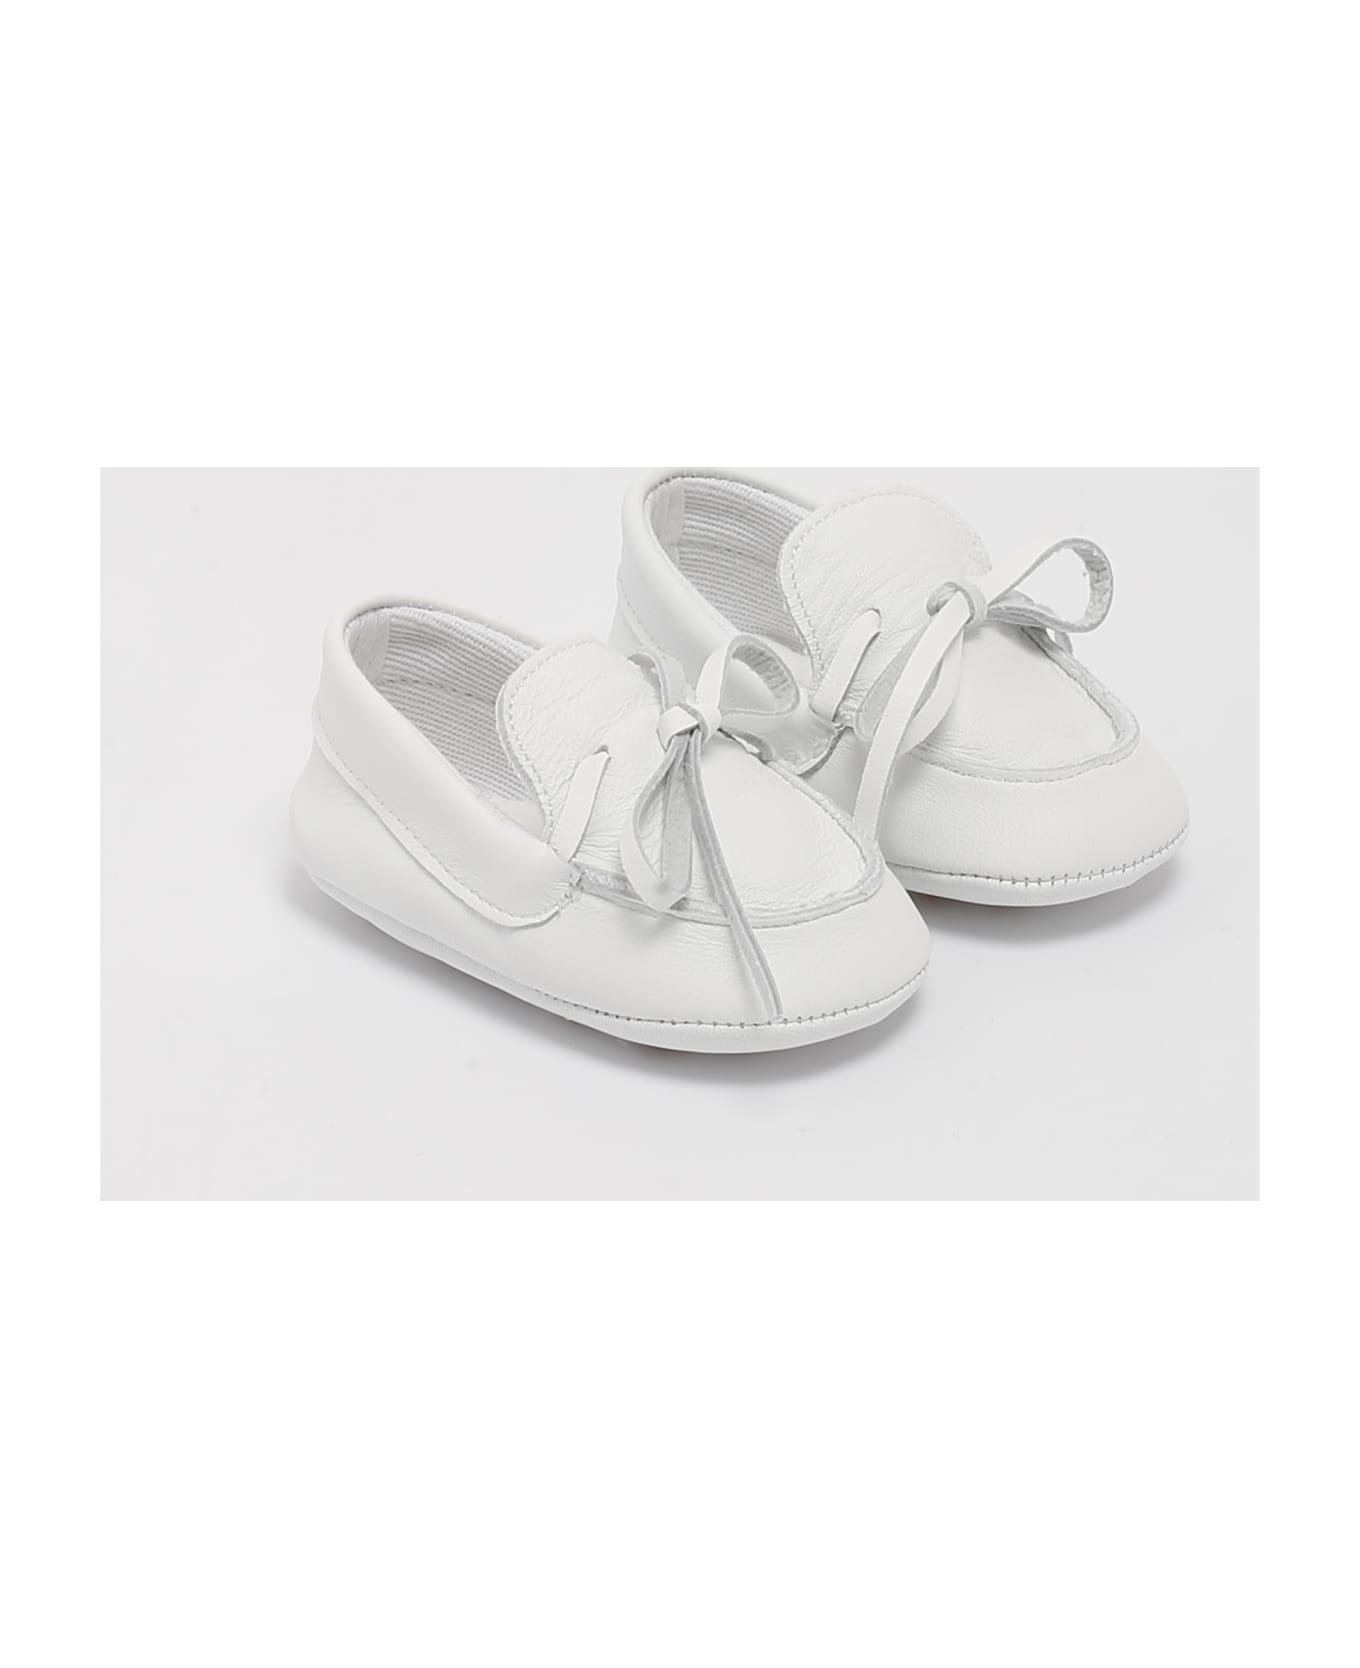 leBebé Baby Shoes Flat Shoes - BIANCO シューズ